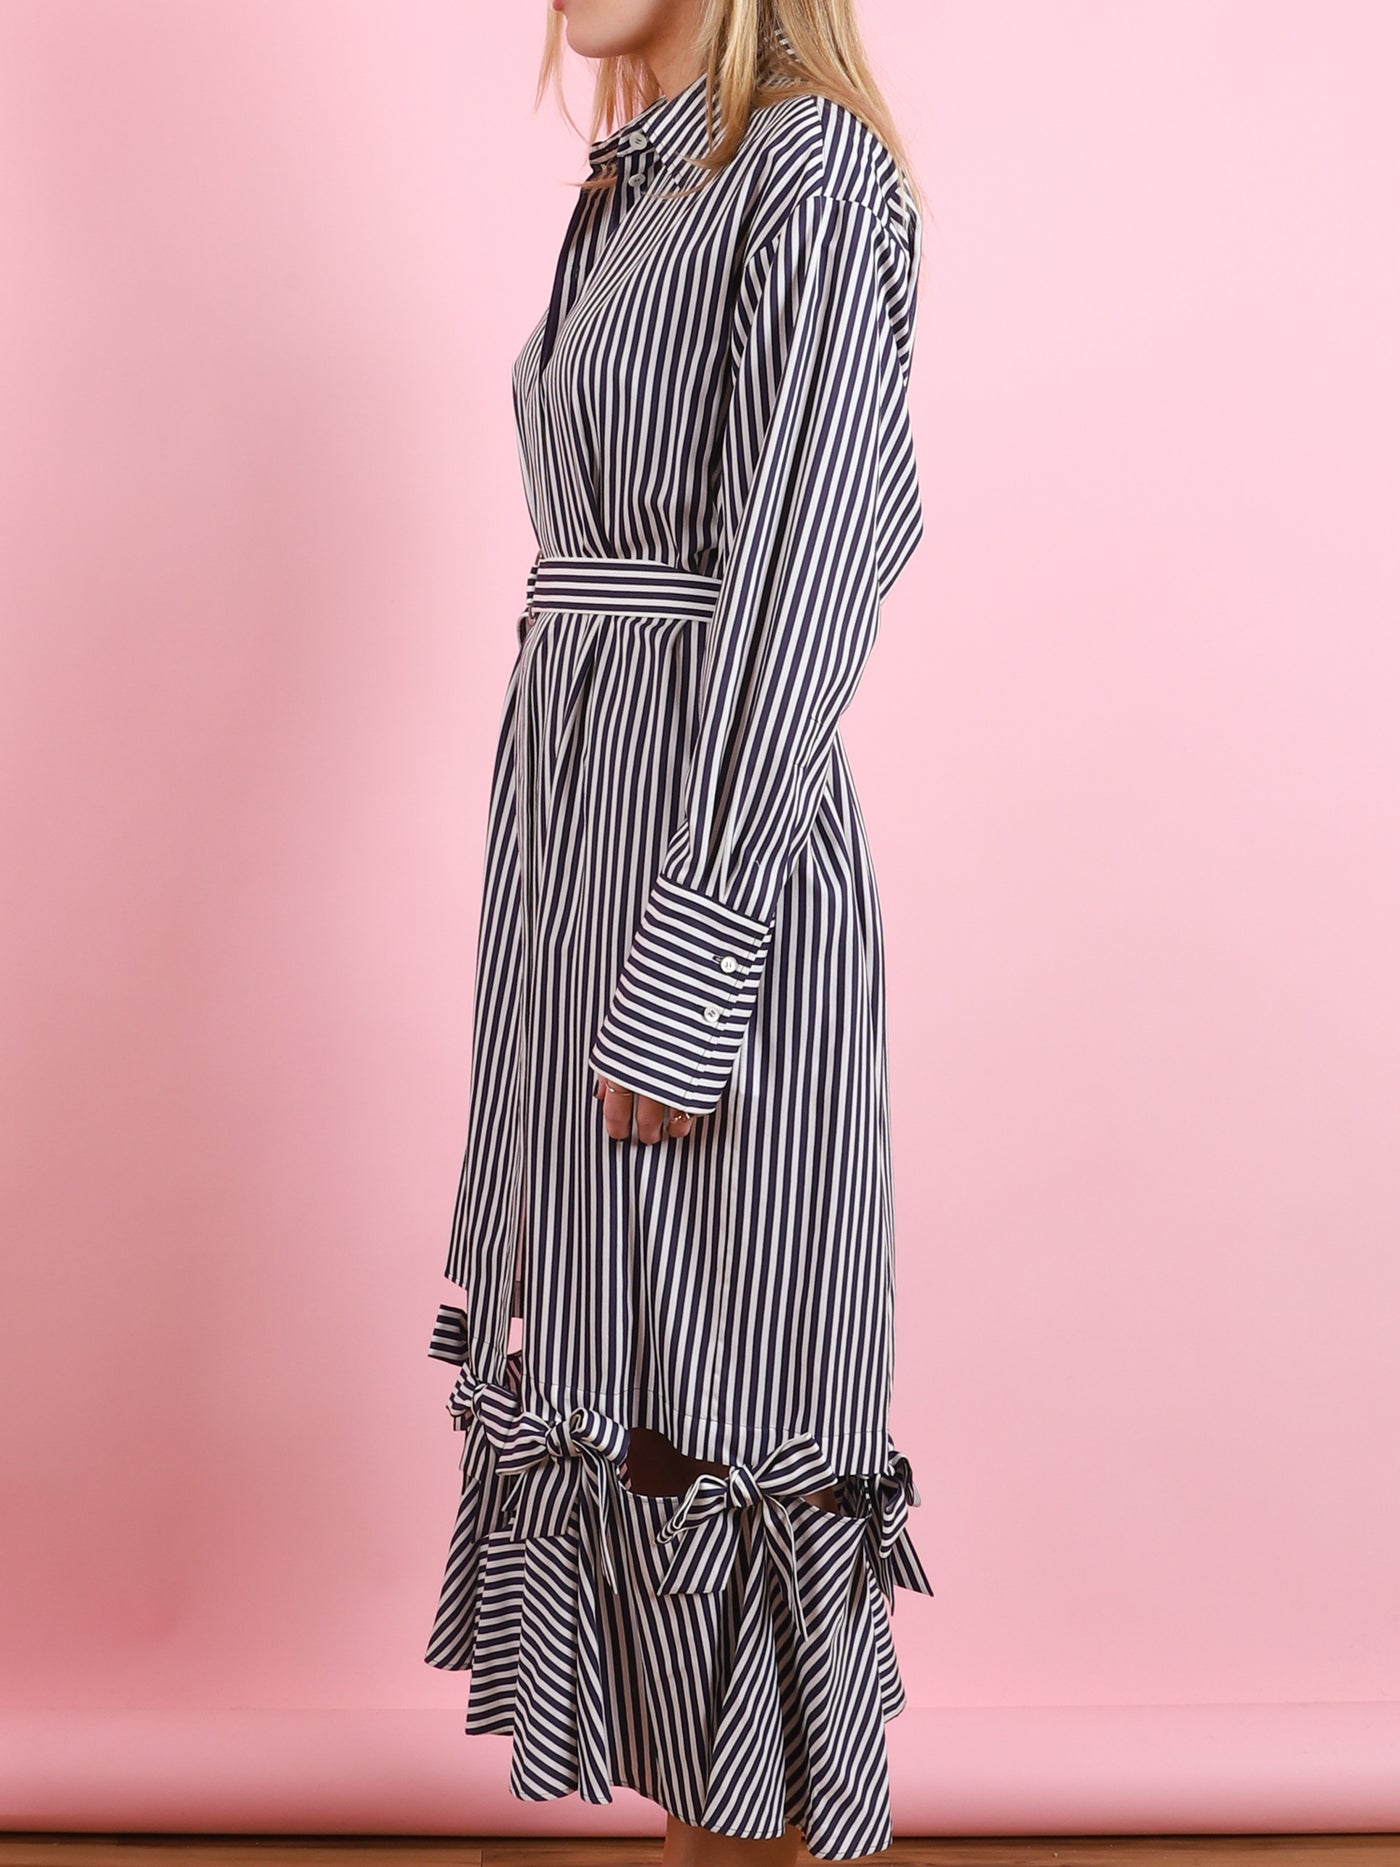 Striped Button Dress